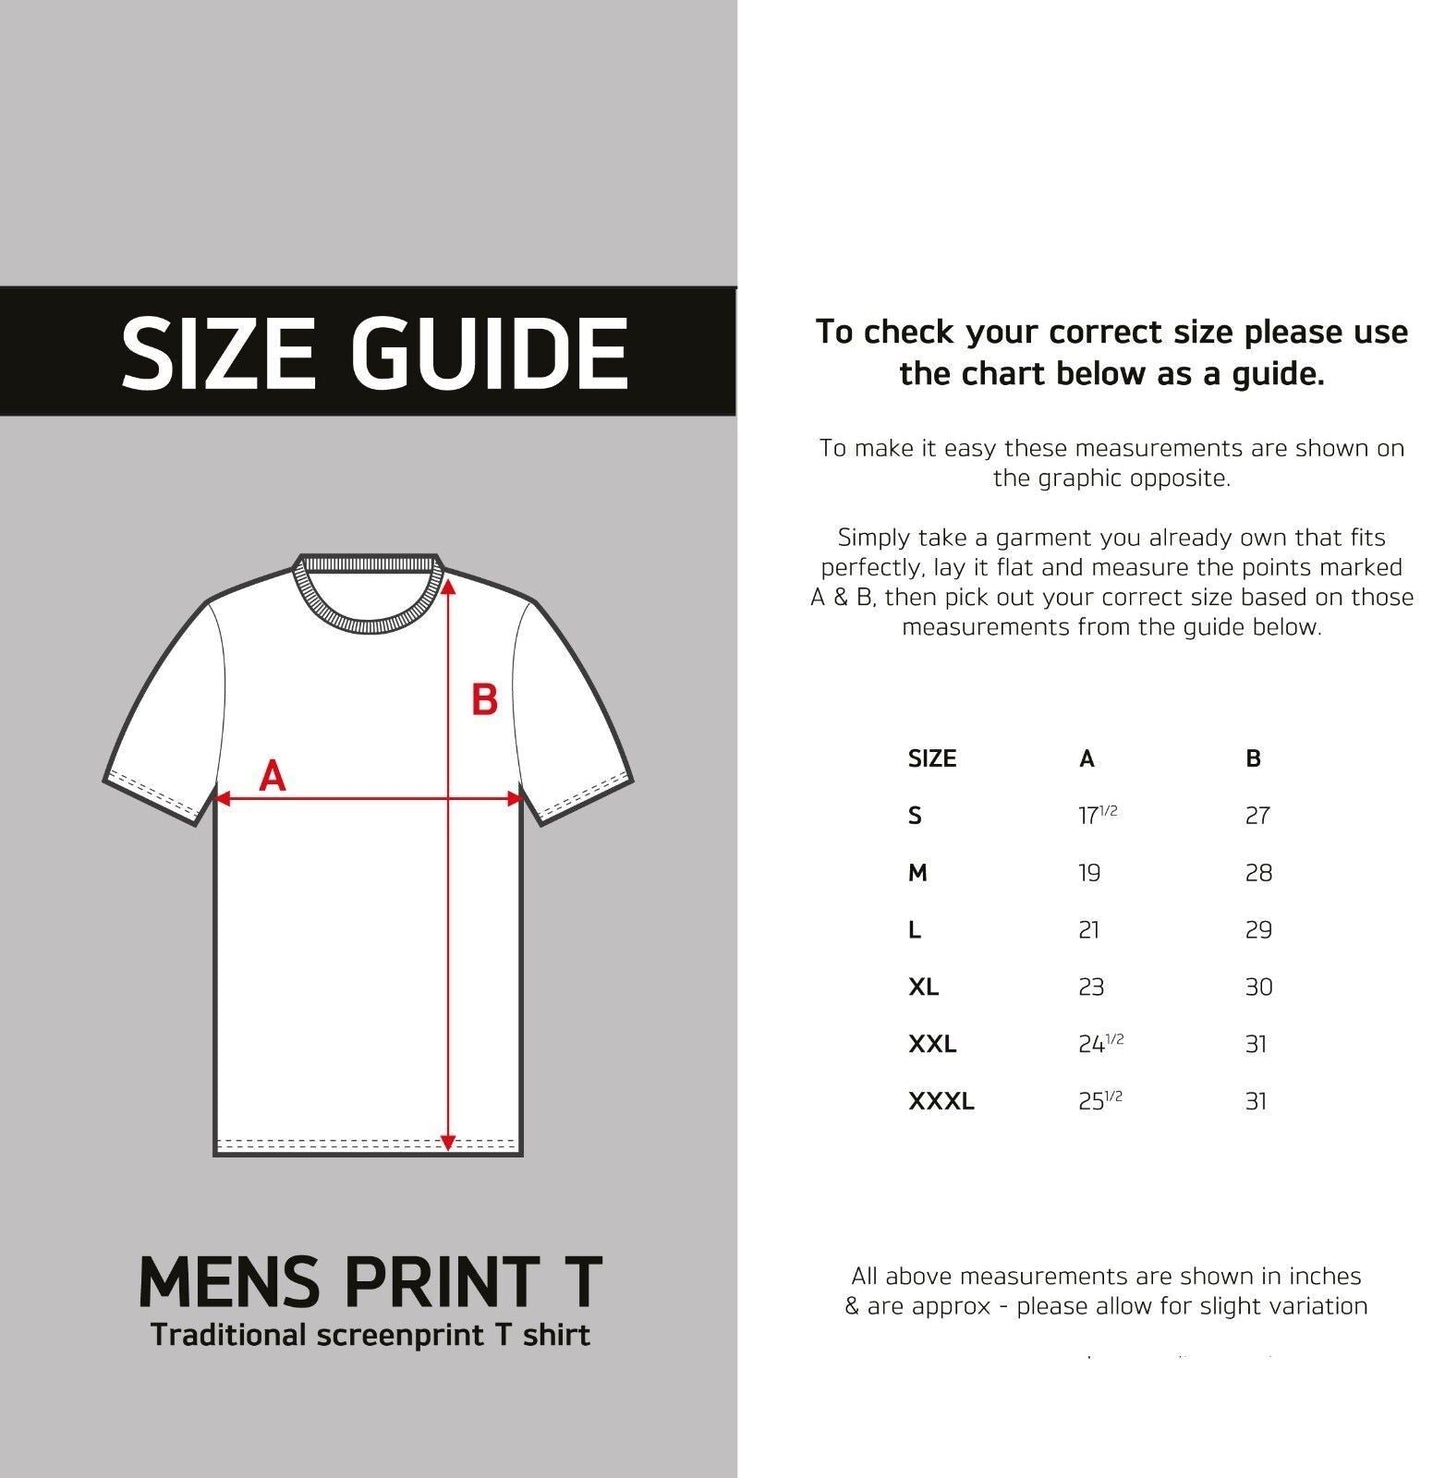 Isle Of Man 2017 Race Black Printed T Shirt - 17Iom-353At